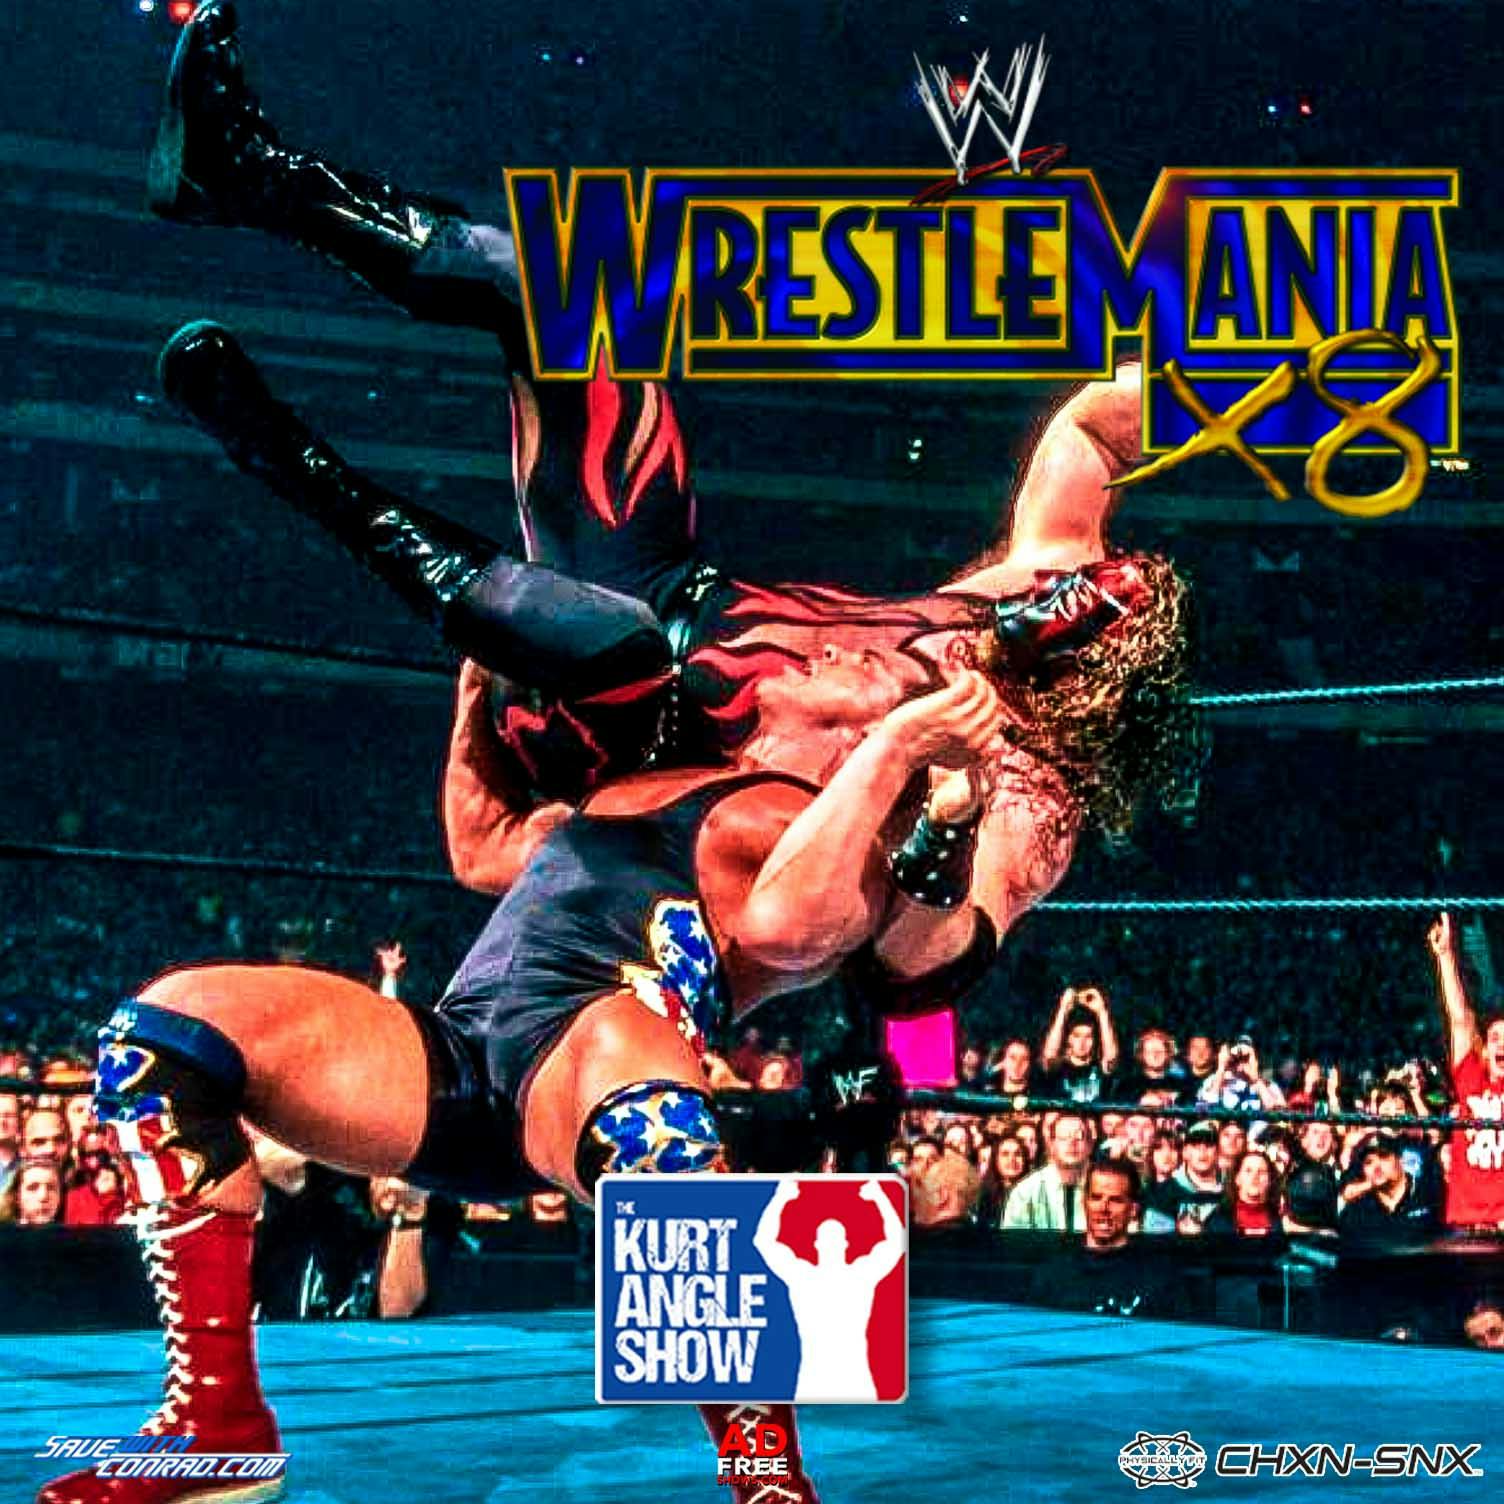 Episode 59: WrestleMania X8